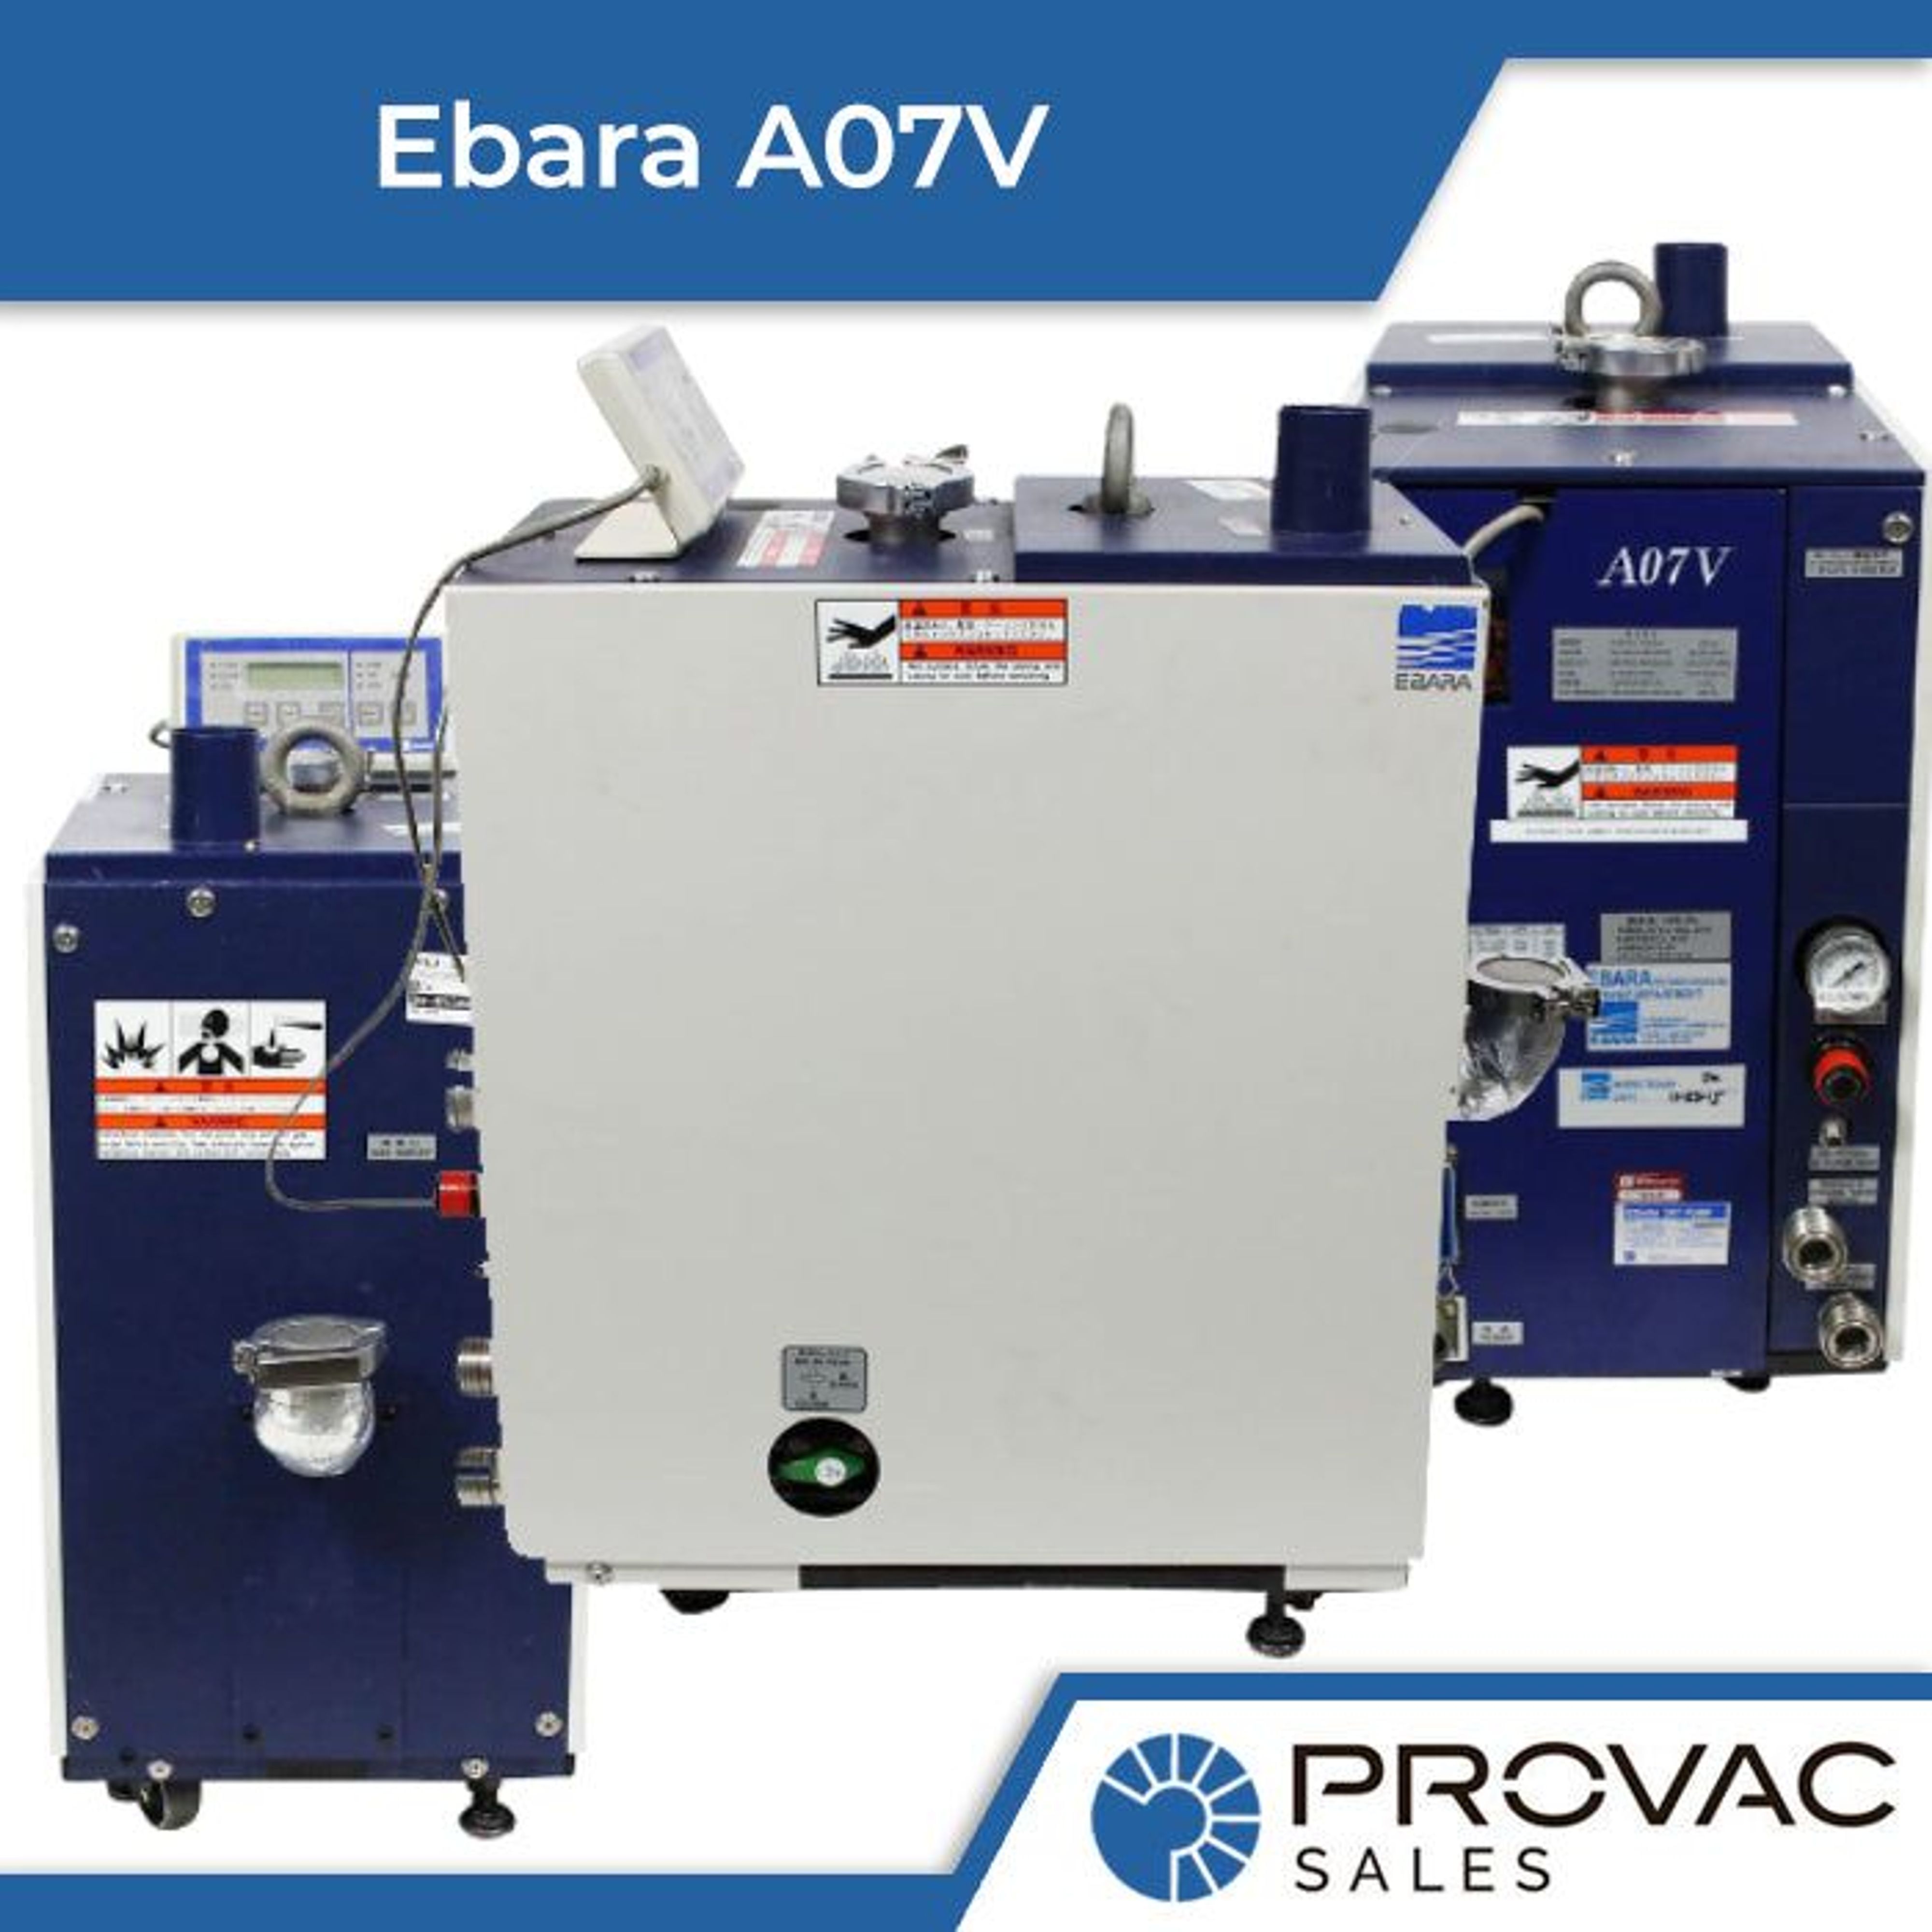 Product Spotlight: Ebara A07V Dry Vacuum Pump Background